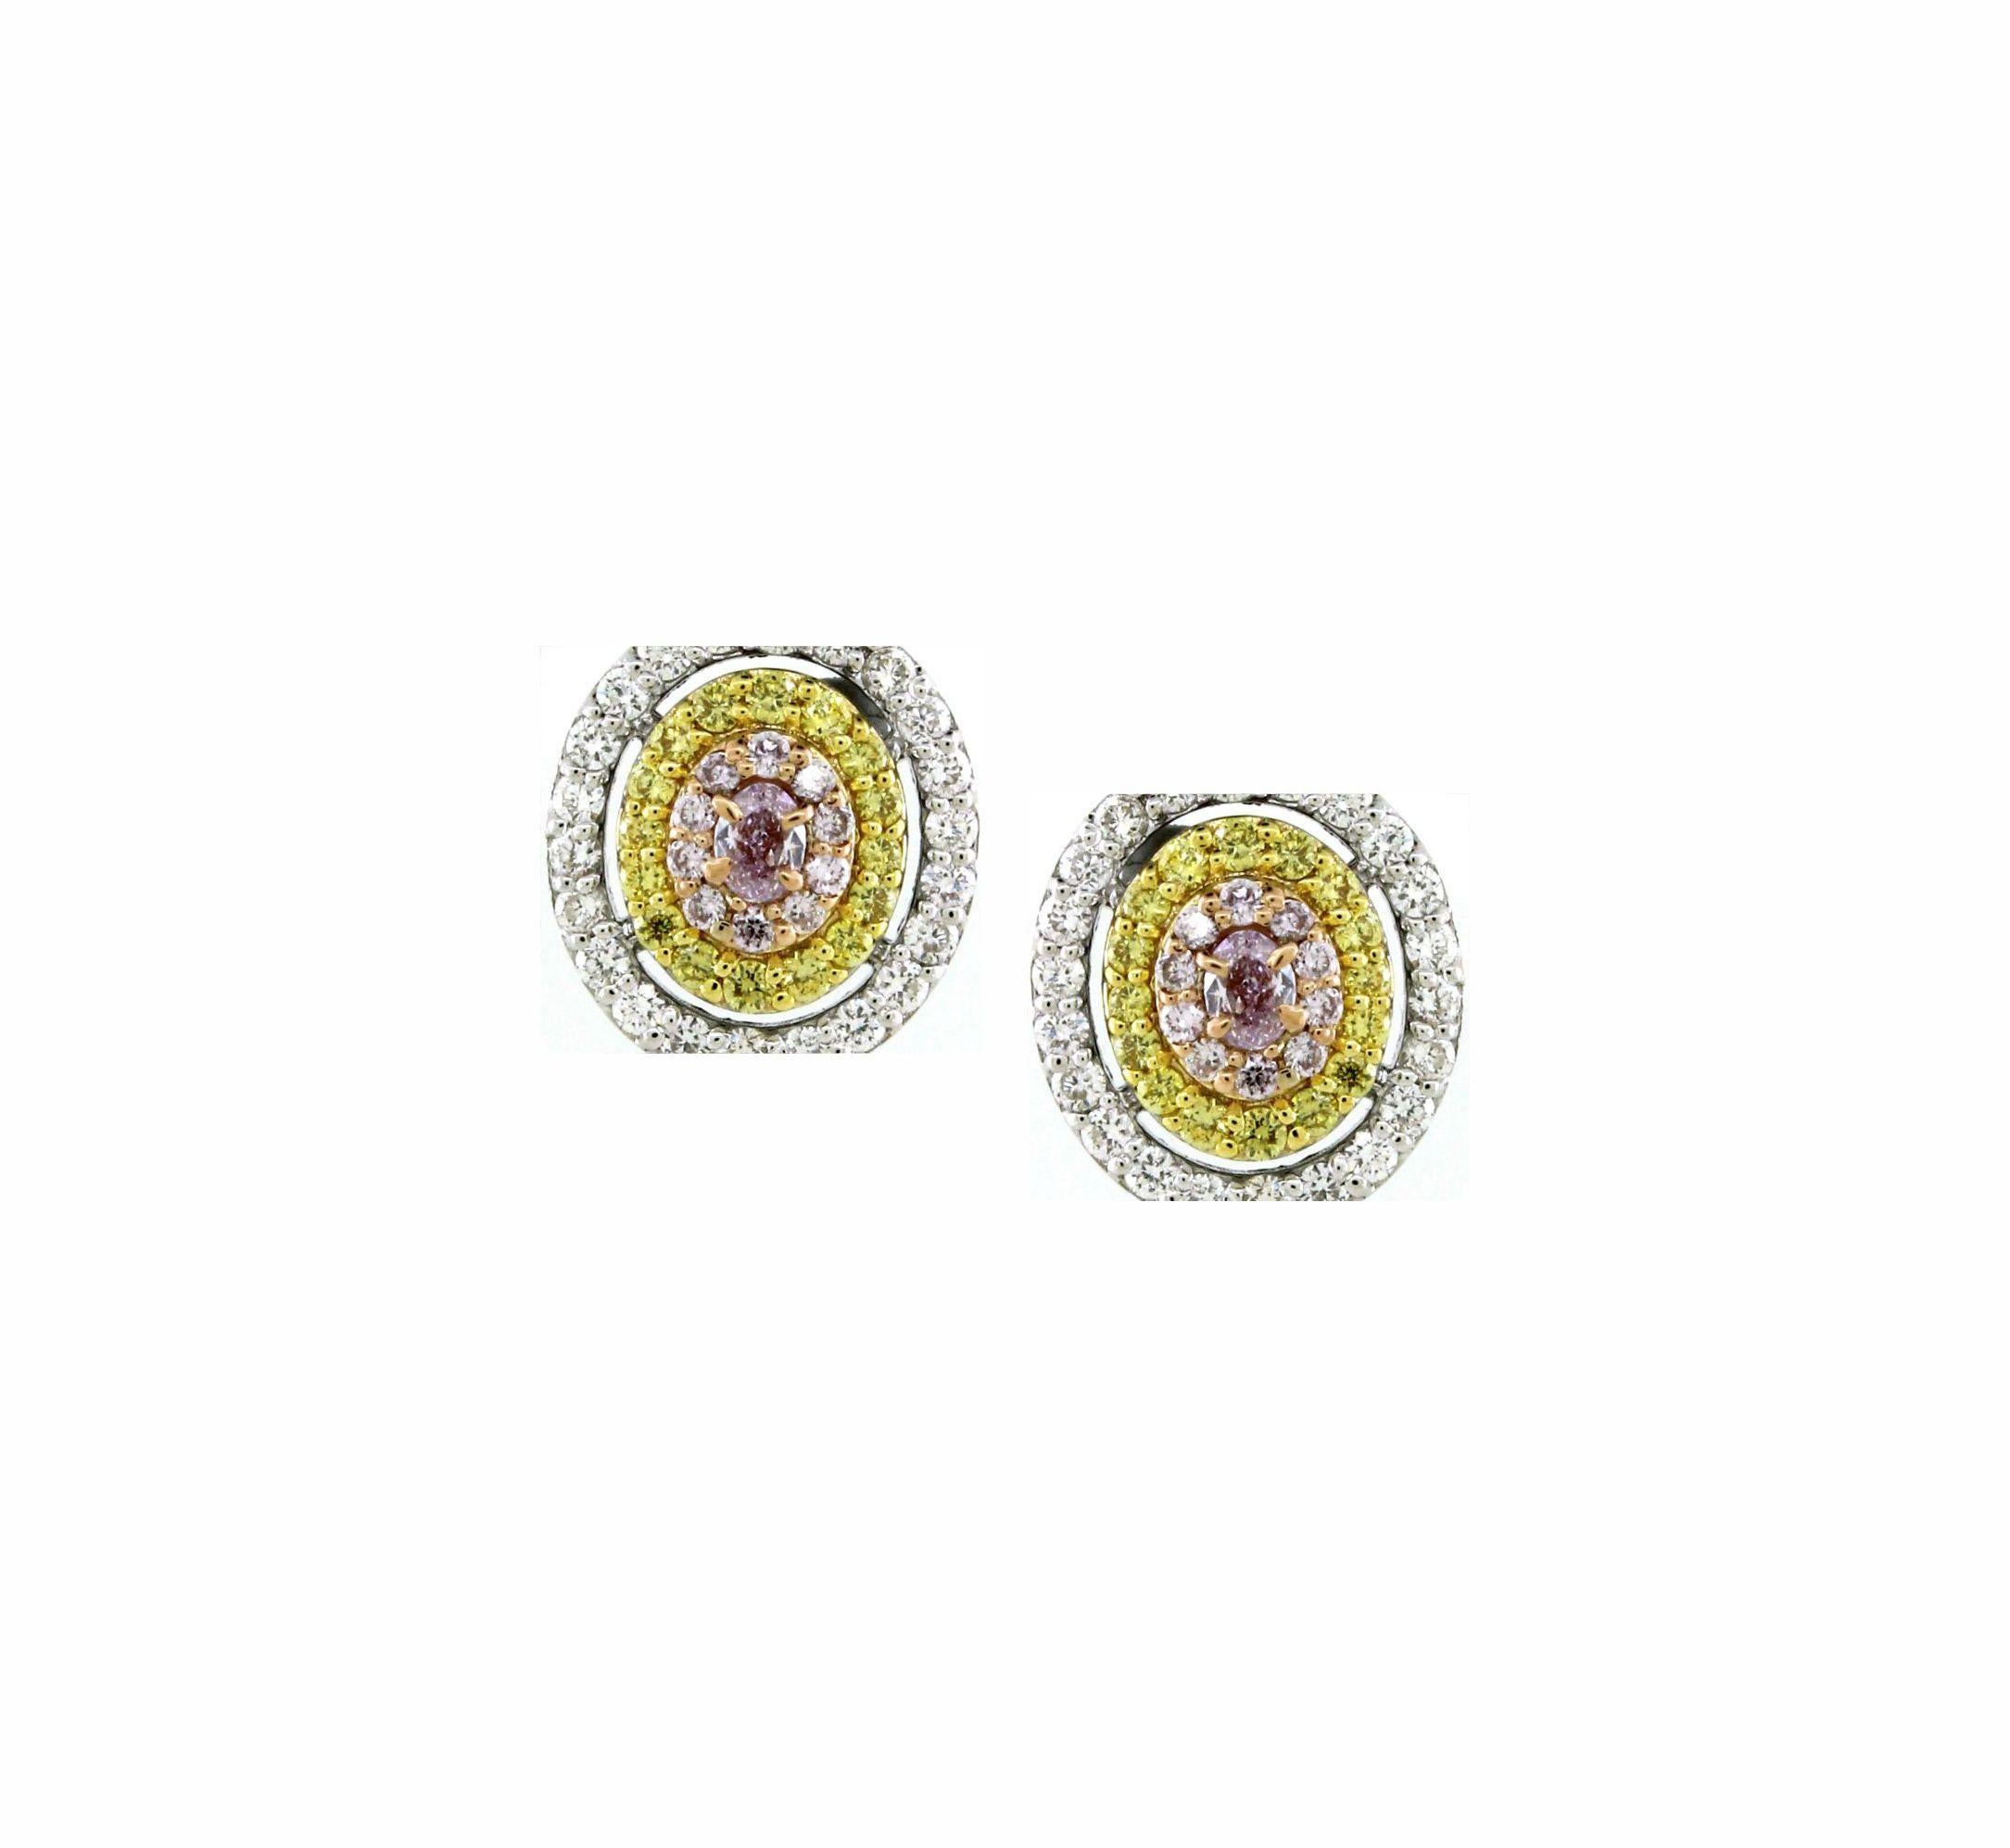 Oval Cut 0.78 cts of Fancy Color Diamond Stud Earrings For Sale